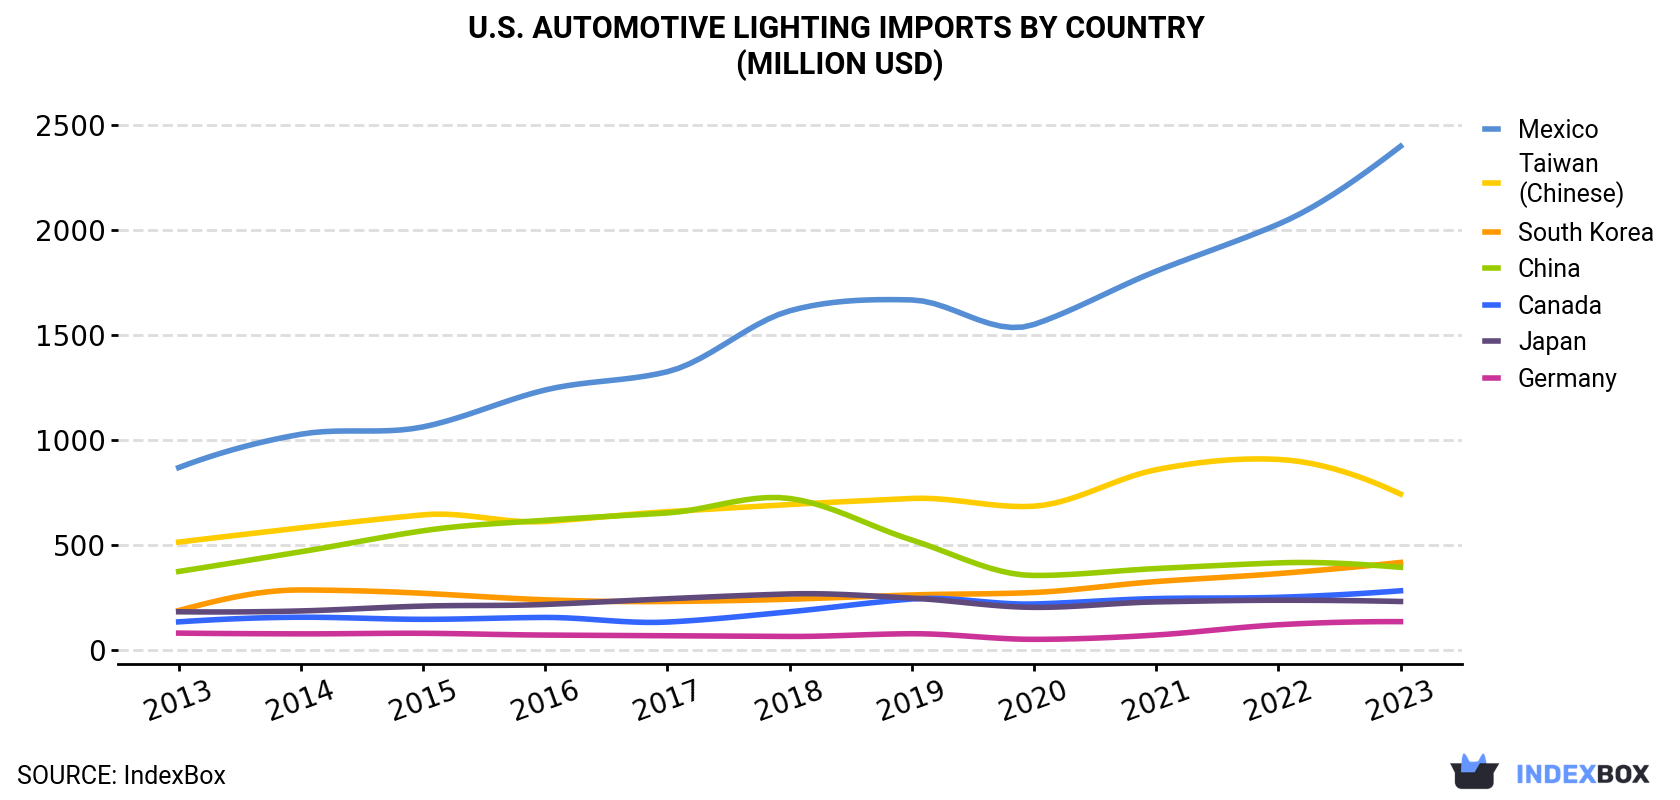 U.S. Automotive Lighting Imports By Country (Million USD)